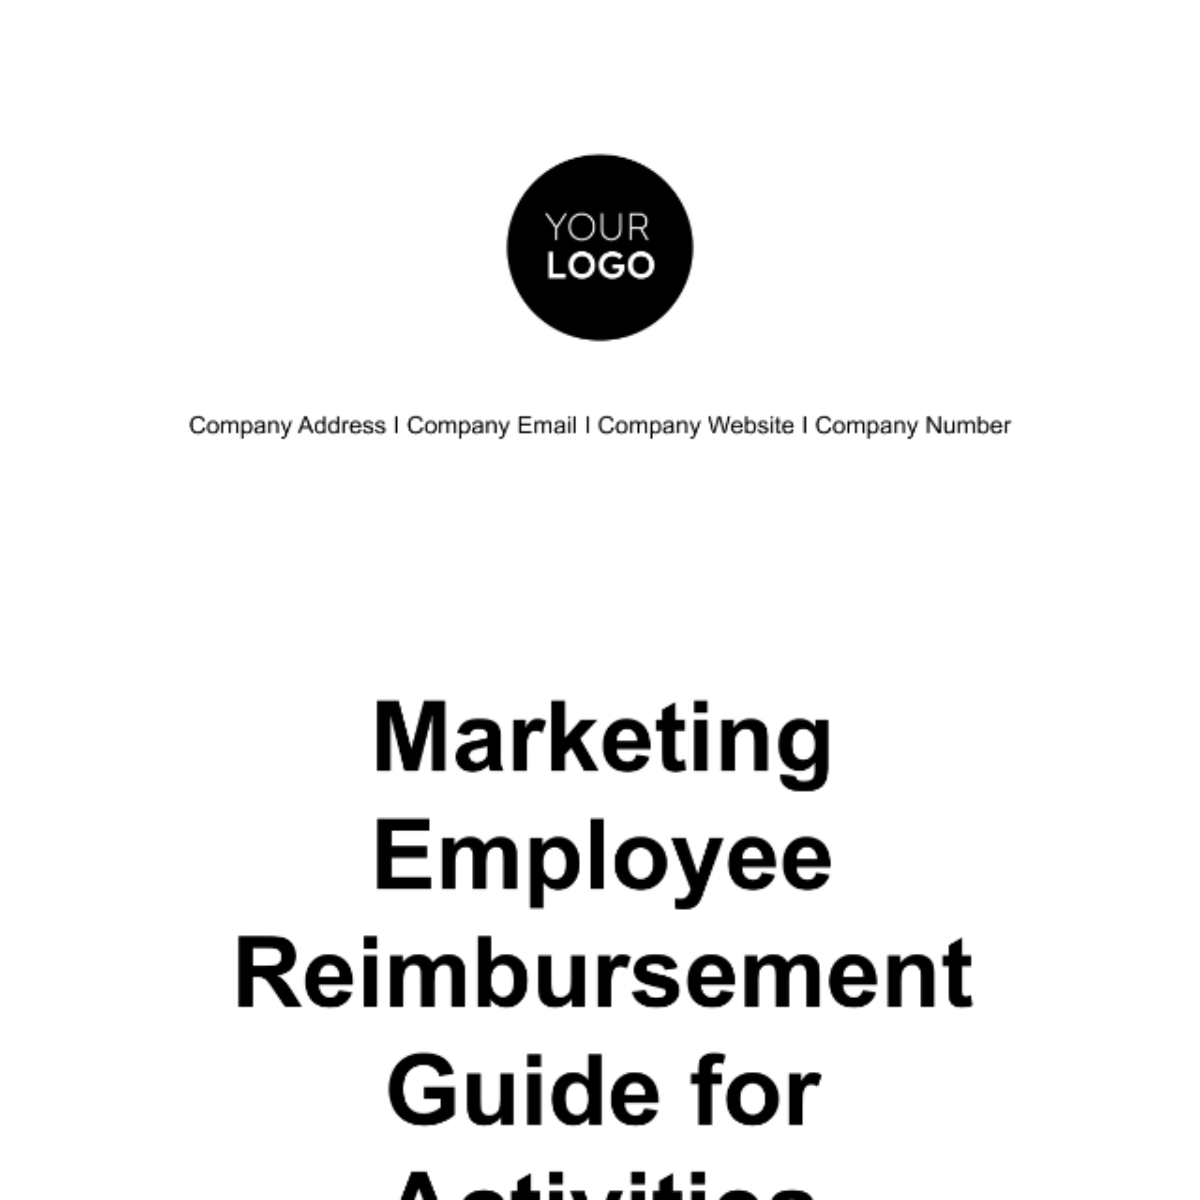 Free Marketing Employee Reimbursement Guide for Activities Template